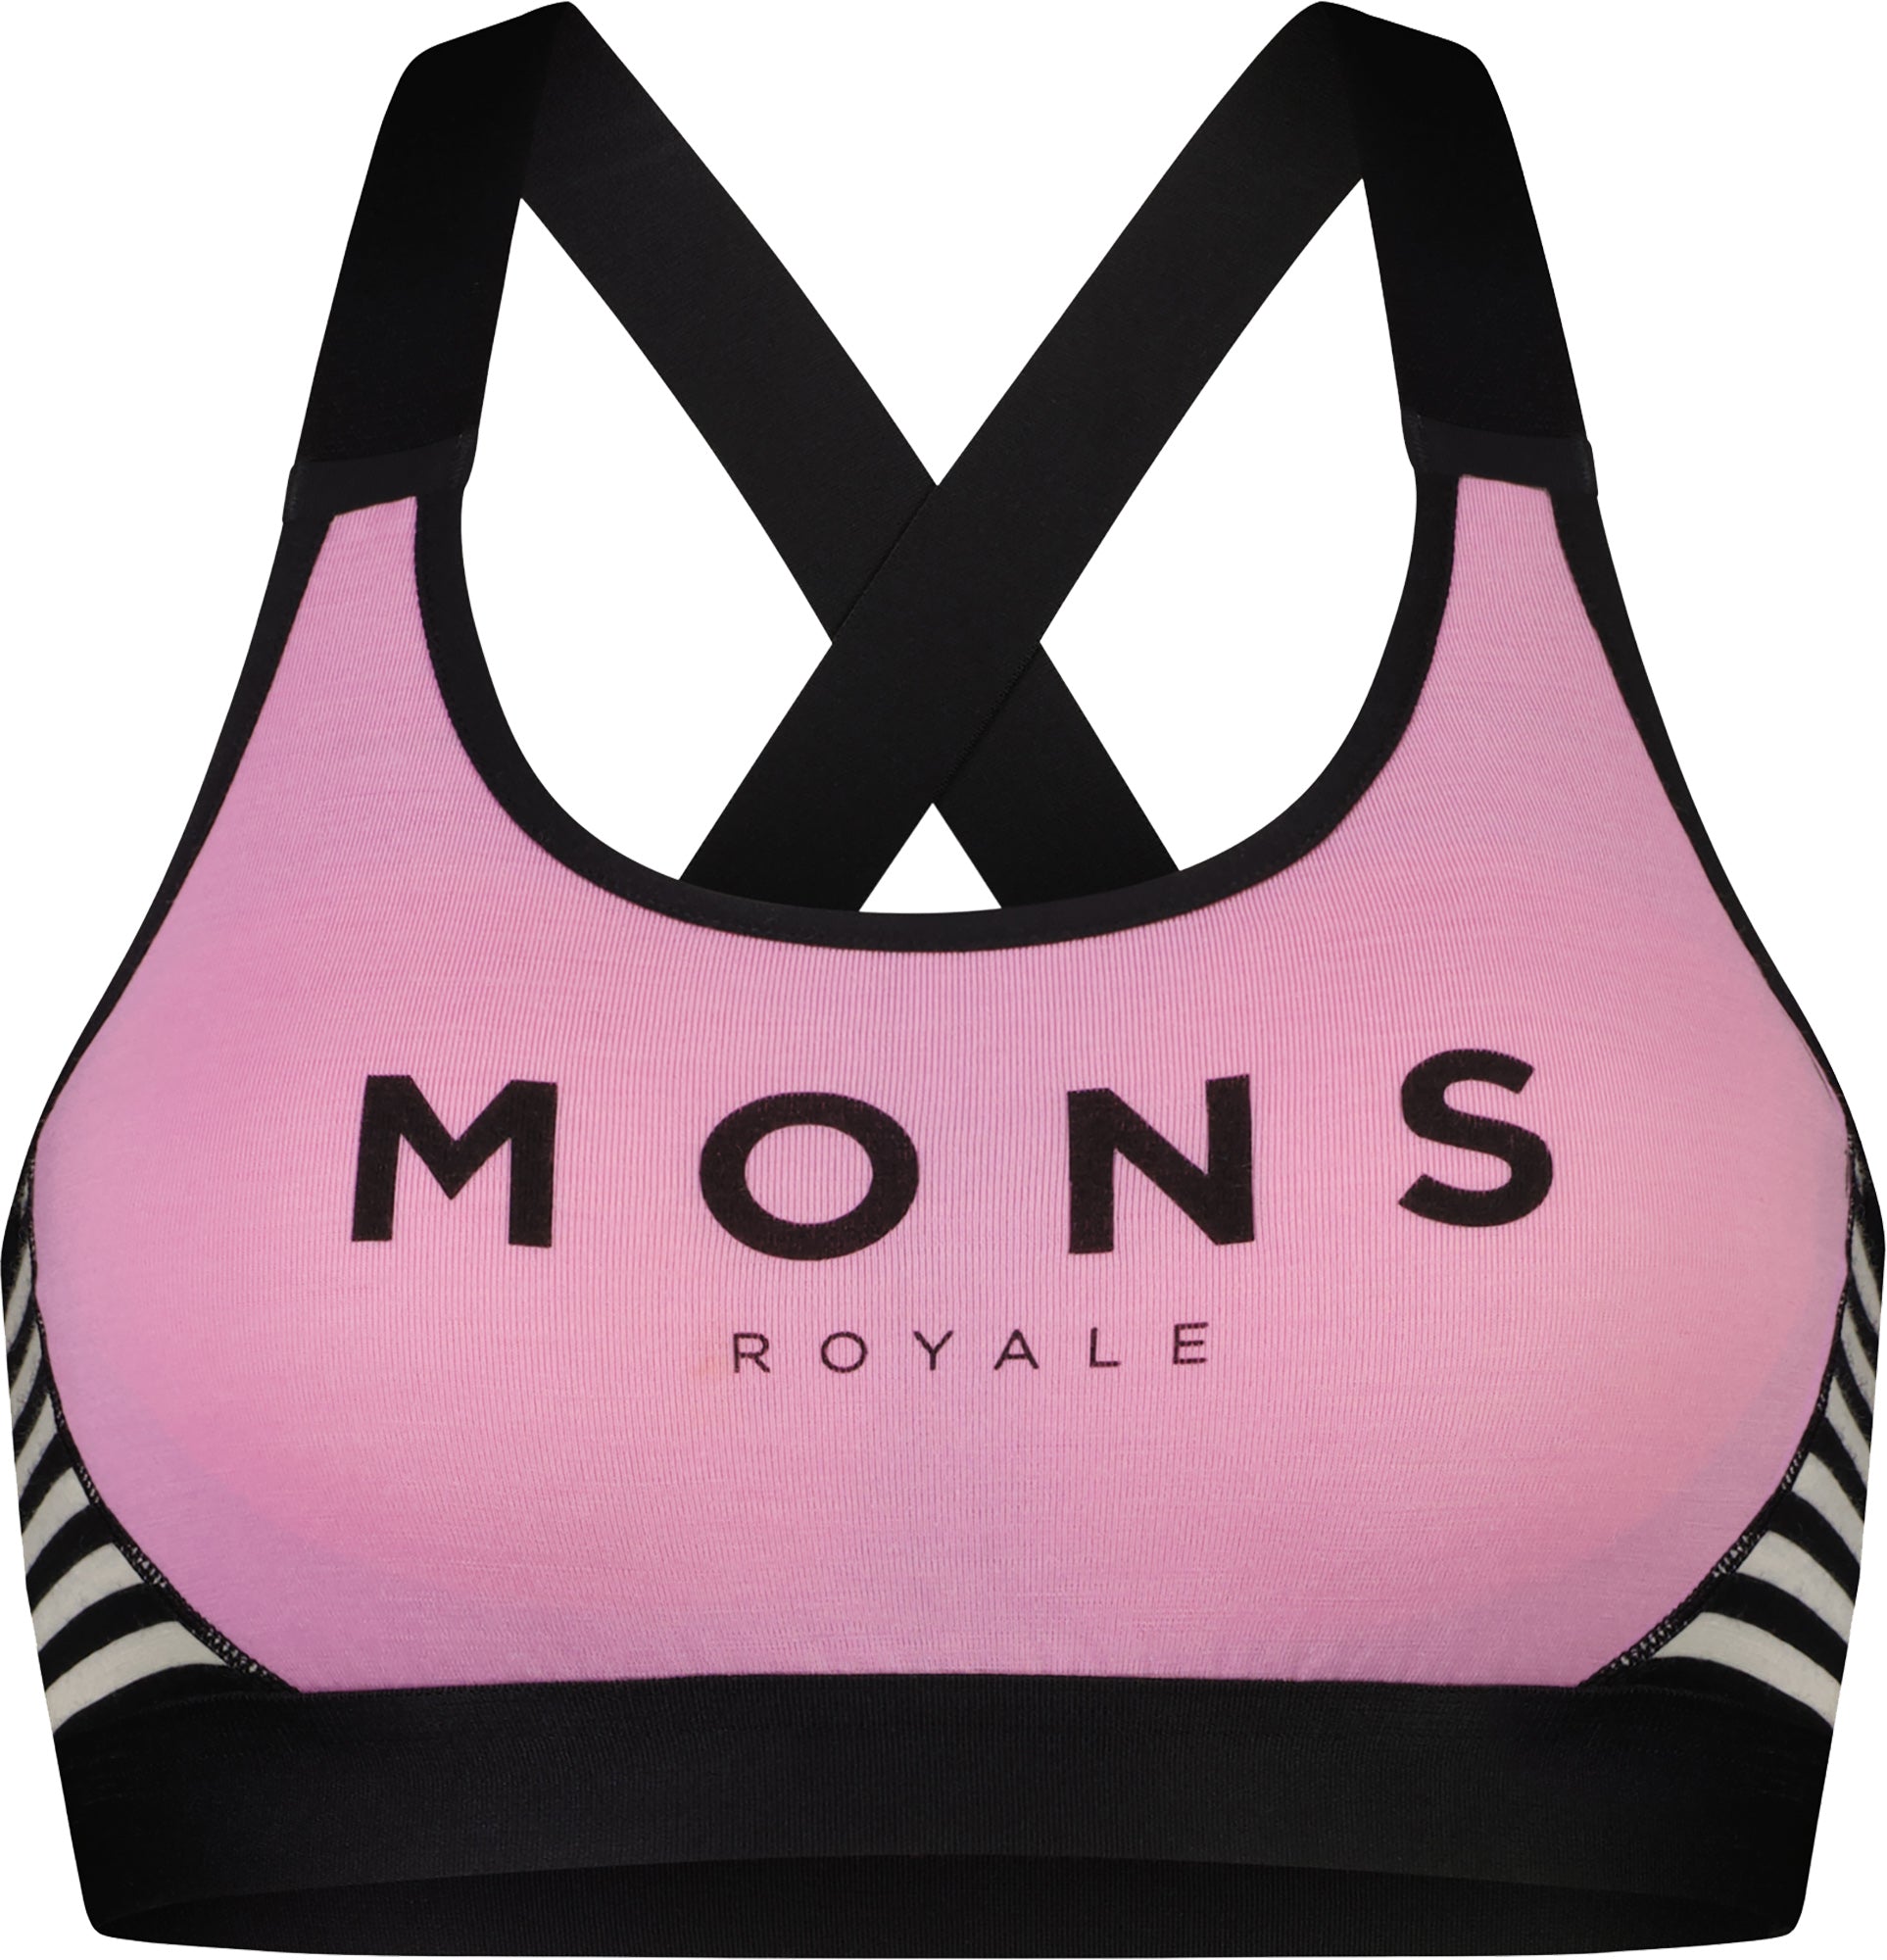 Mons Royale Stratos Shift Women's Merino Wool Sports Bra